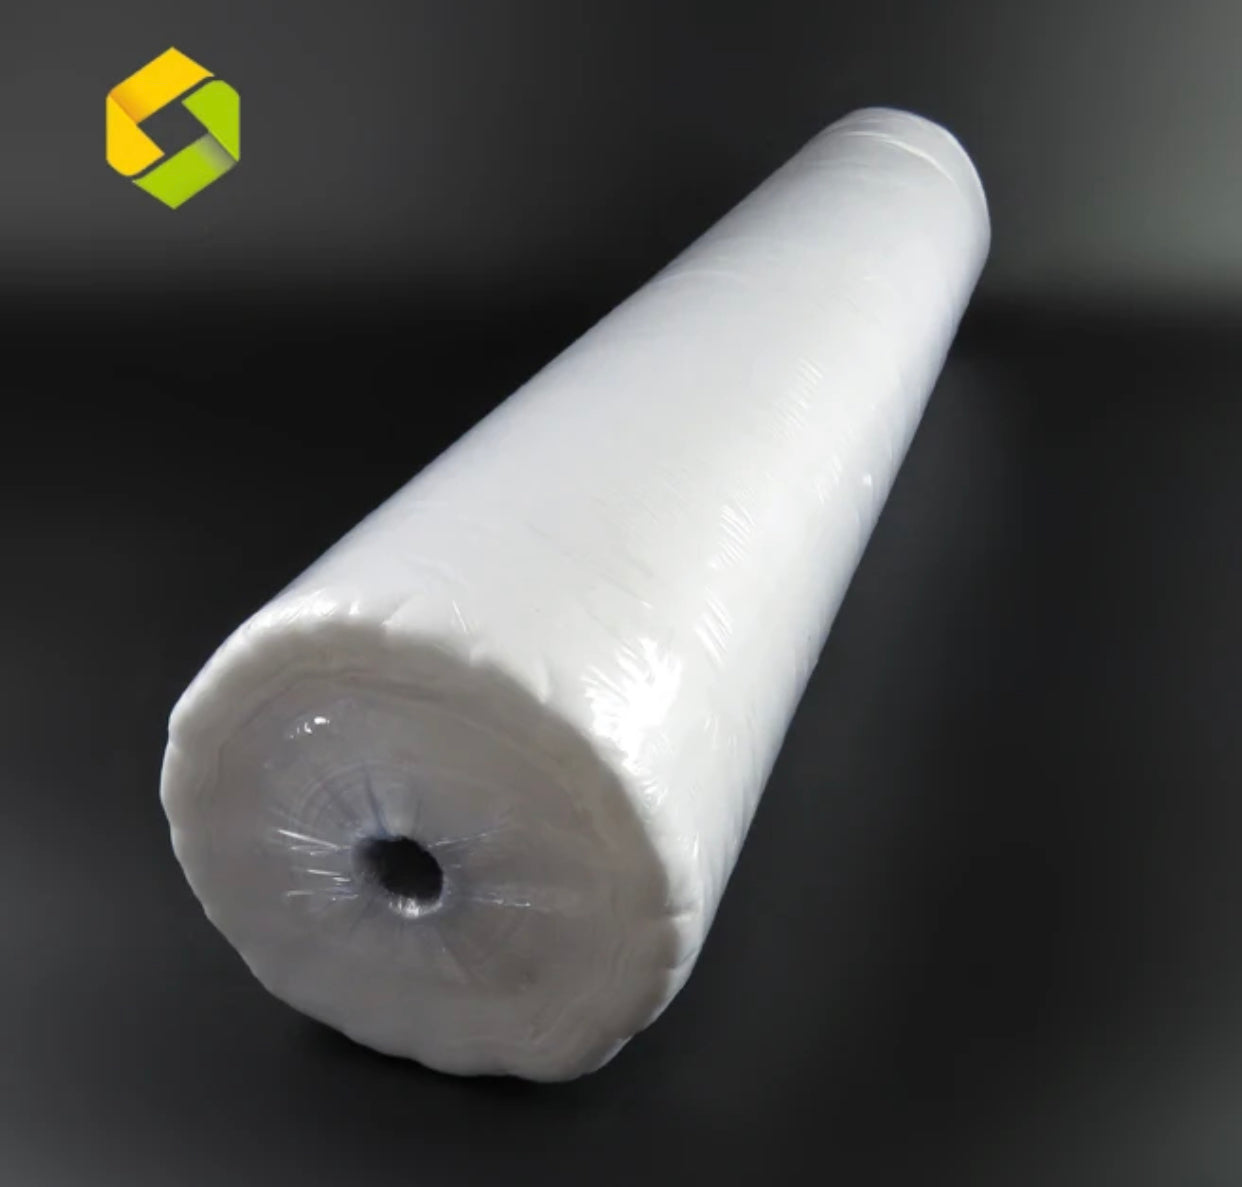 Disposable waterproof wax paper roll XL